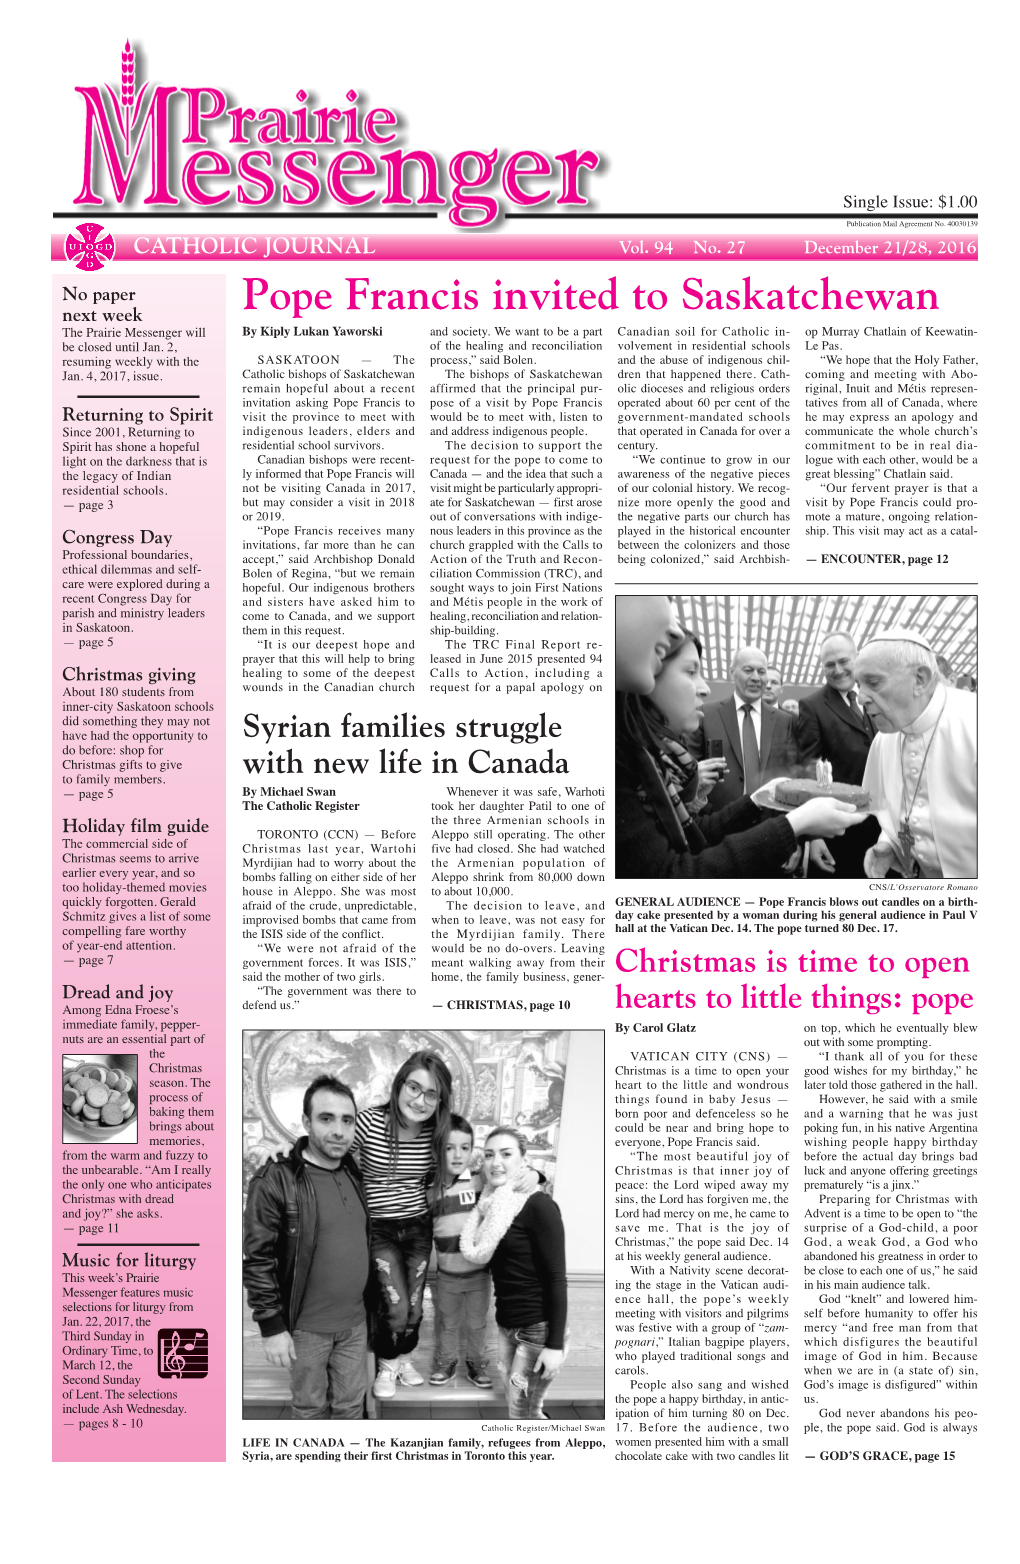 Pope Francis Invited to Saskatchewan Next Week